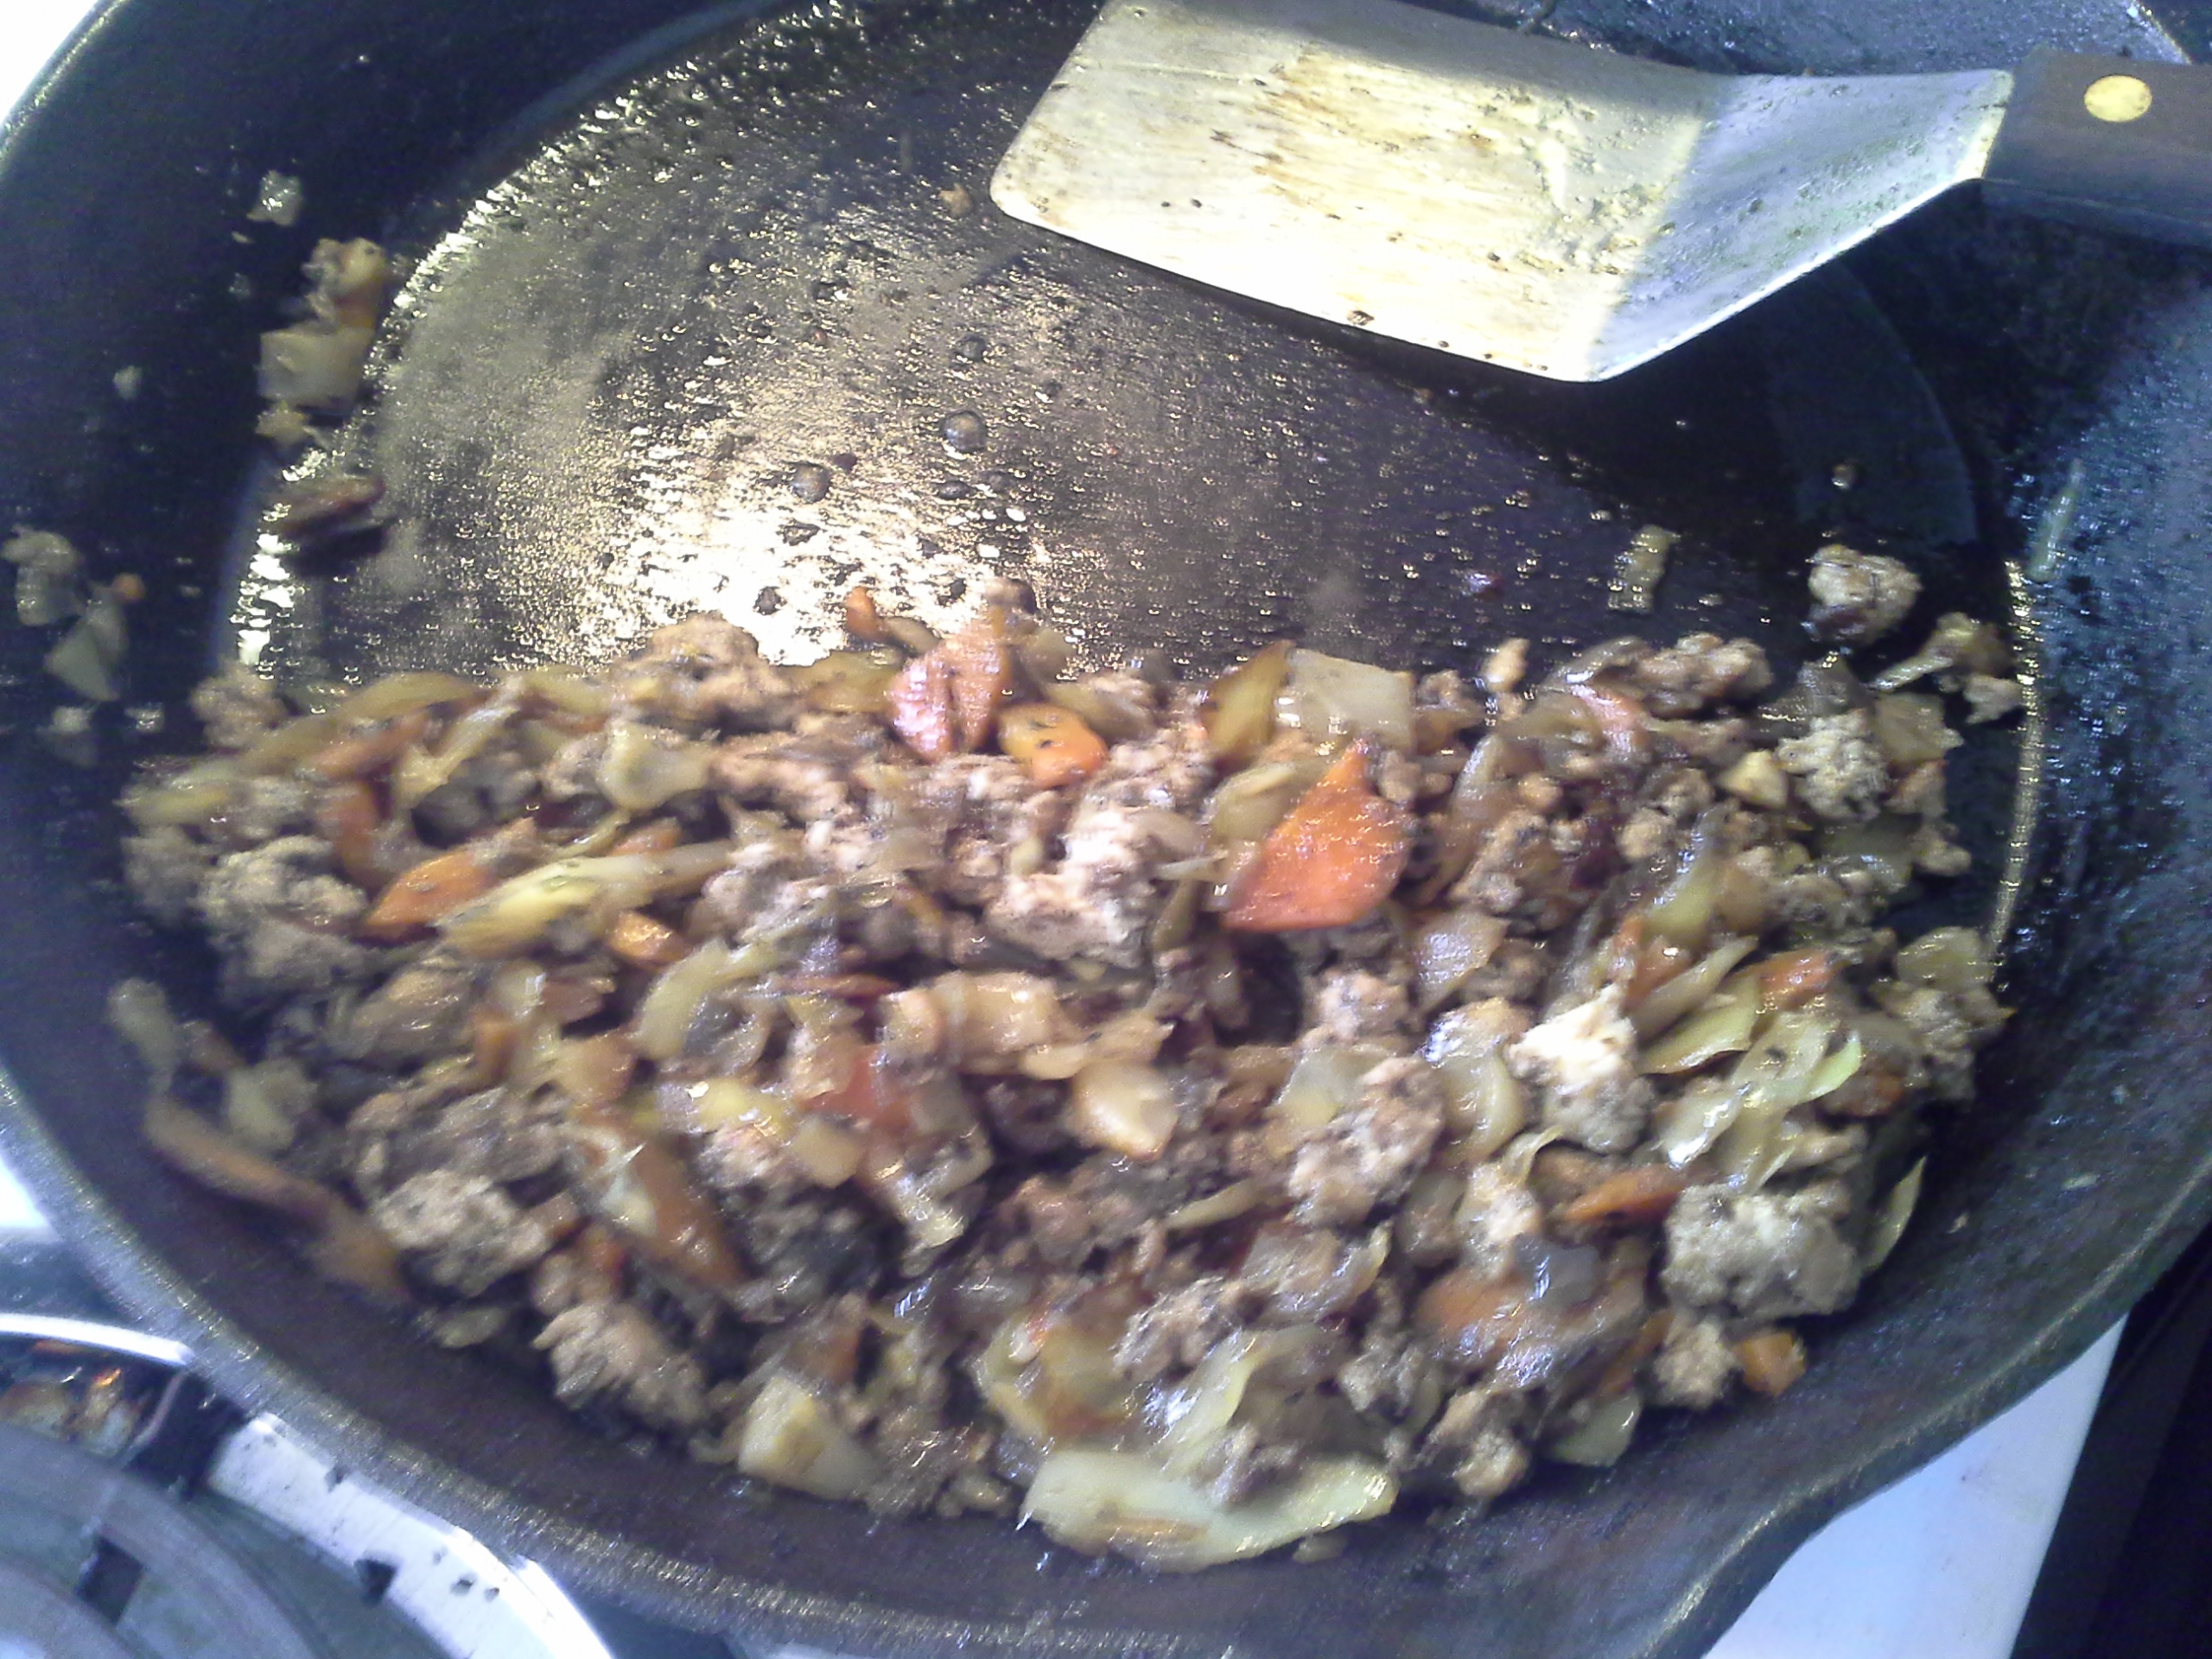 Breakfast: 10:45 a.m. | 10 oz. ground chicken, 1/8 head cabbage, 1 carrot, 1/2 red onion, 4 cloves garlic, 2 Tbsp. coconut oil, herbs & spices